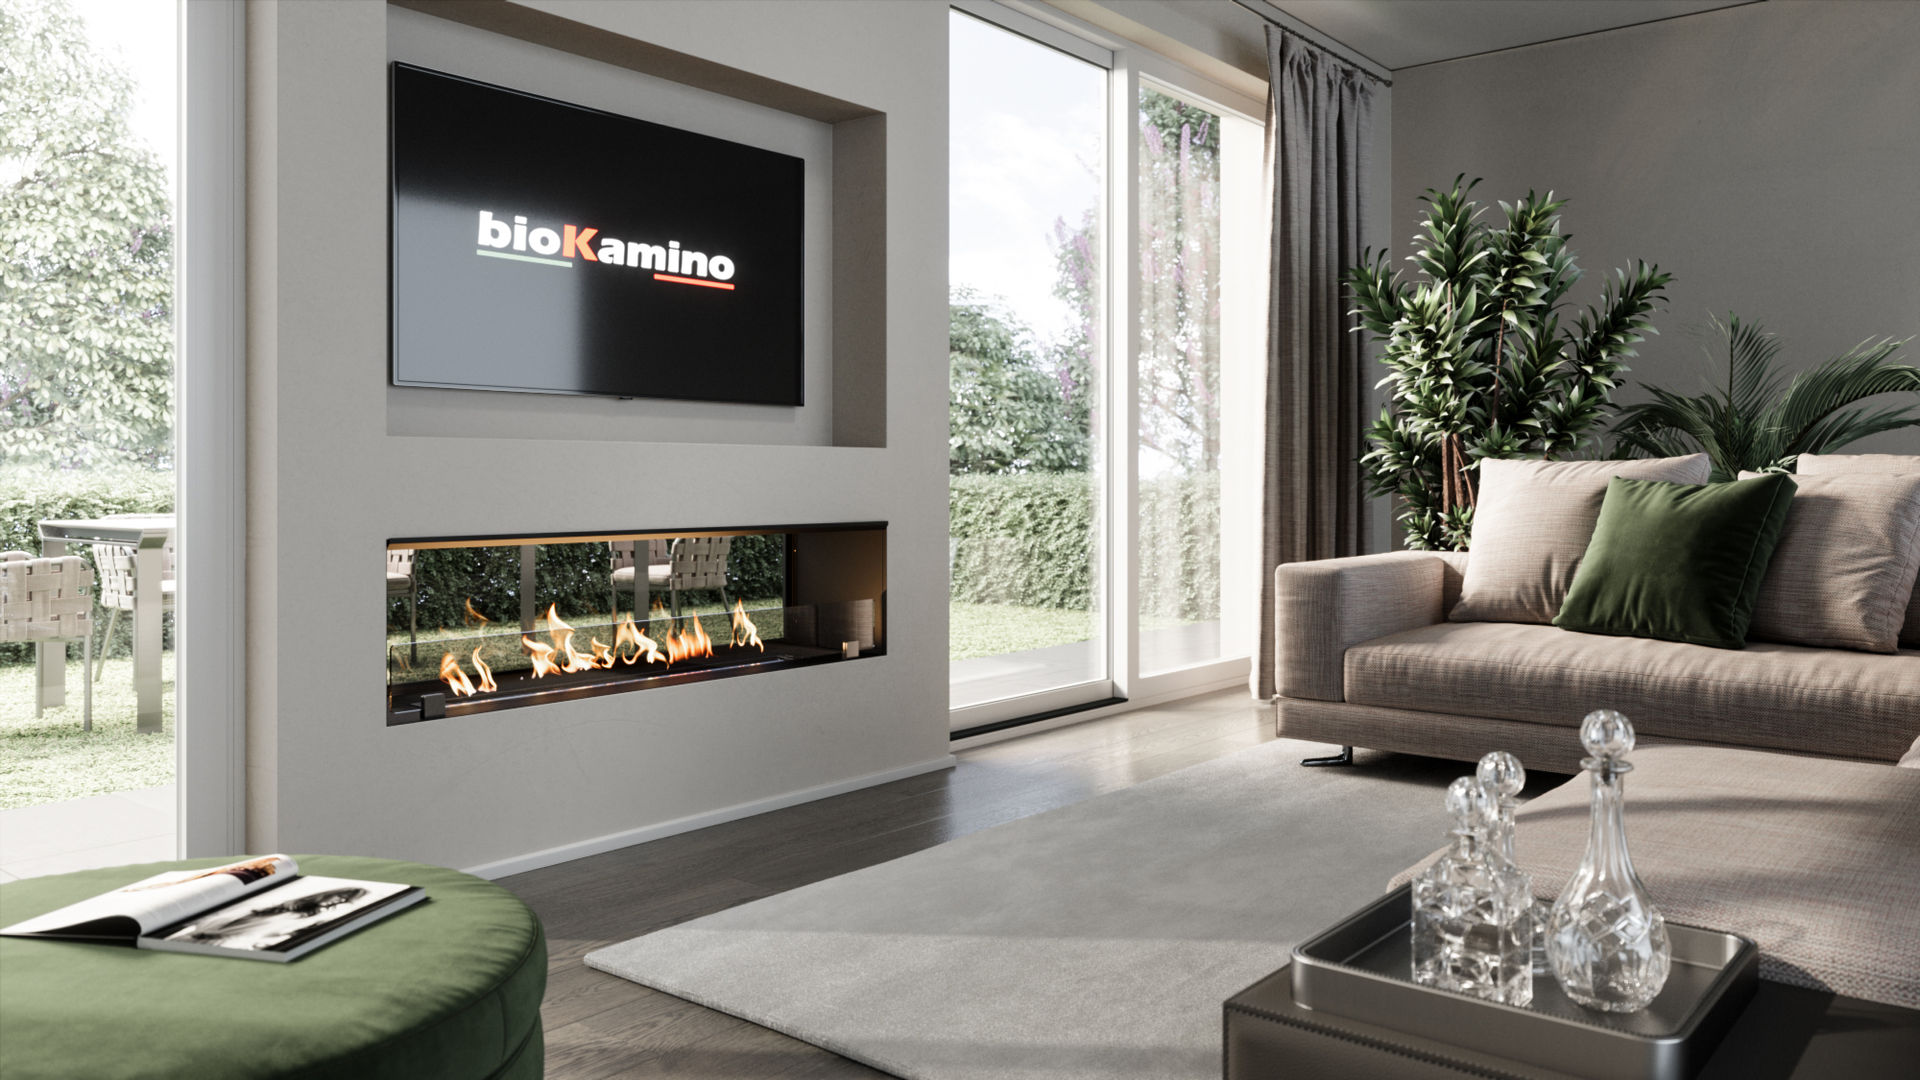 BKBF - LINEA DA INCASSO, bioKamino bioKamino Modern houses Iron/Steel Accessories & decoration